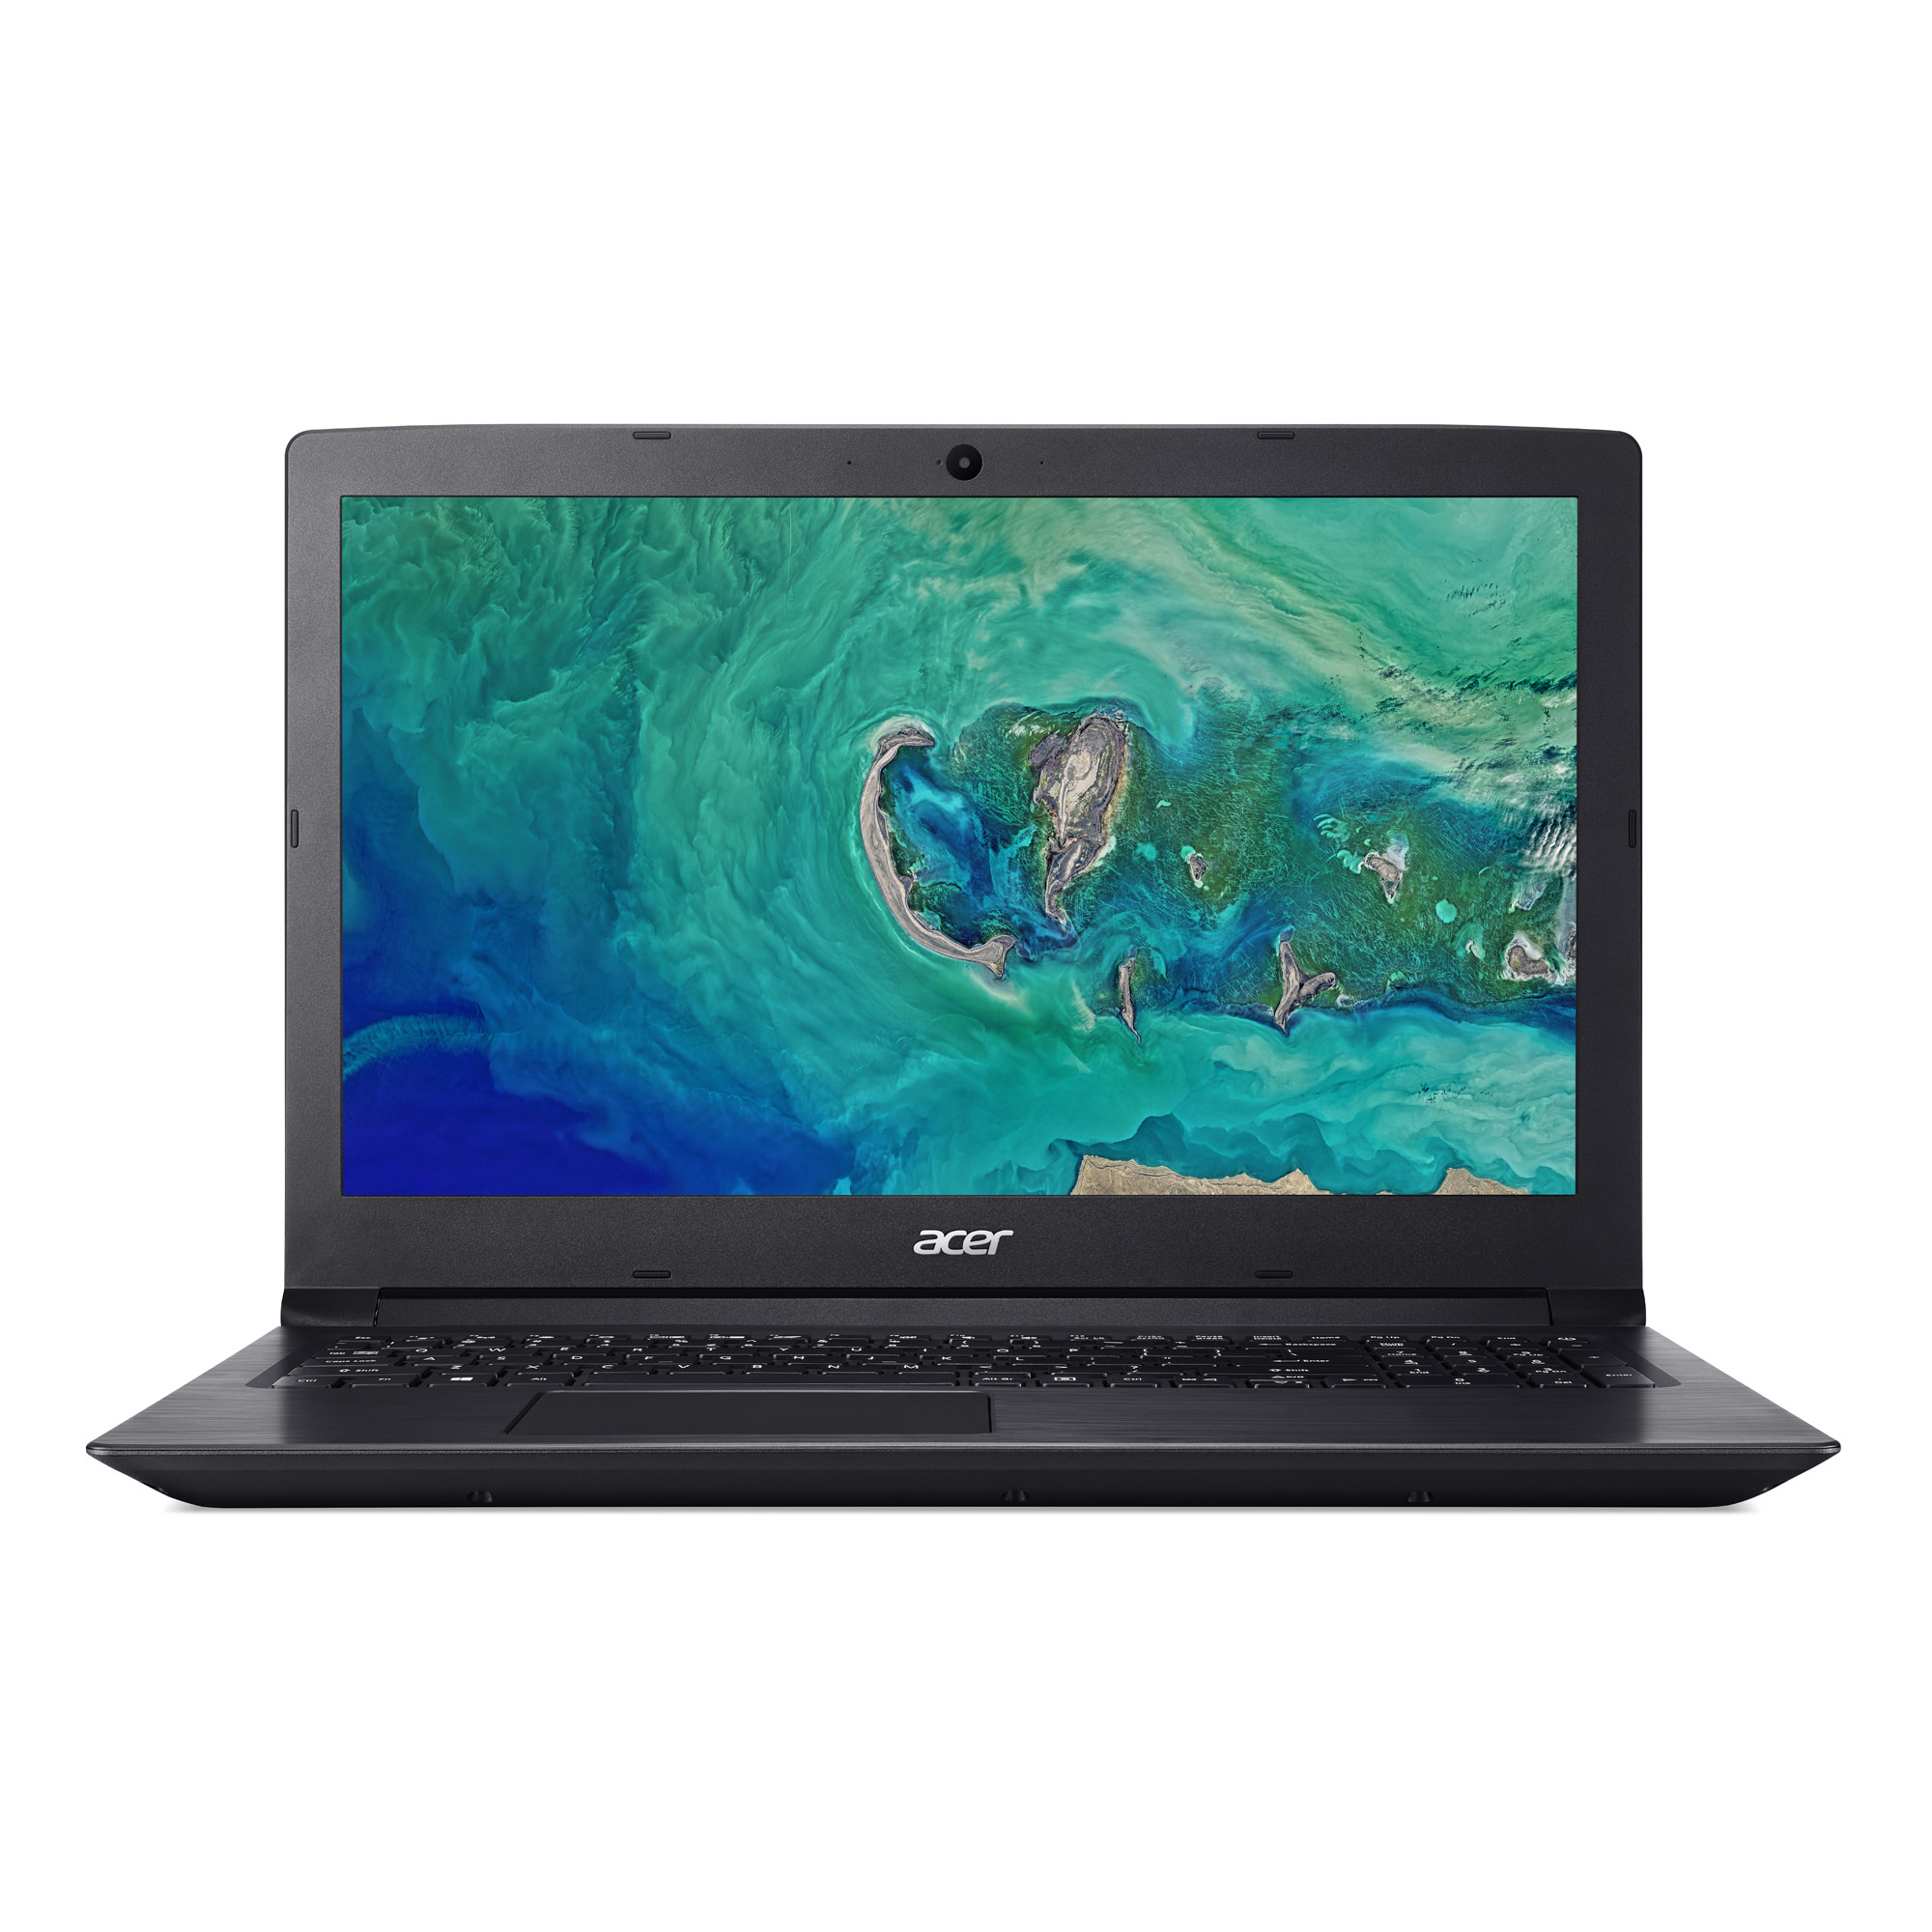 Acer Aspire 3 A315-41-R98U Laptop, 15.6", Ryzen 5 2500, AMD Radeon Vega 8, 8GB, 256GB SSD, NX.GY9AA.013 - image 1 of 5